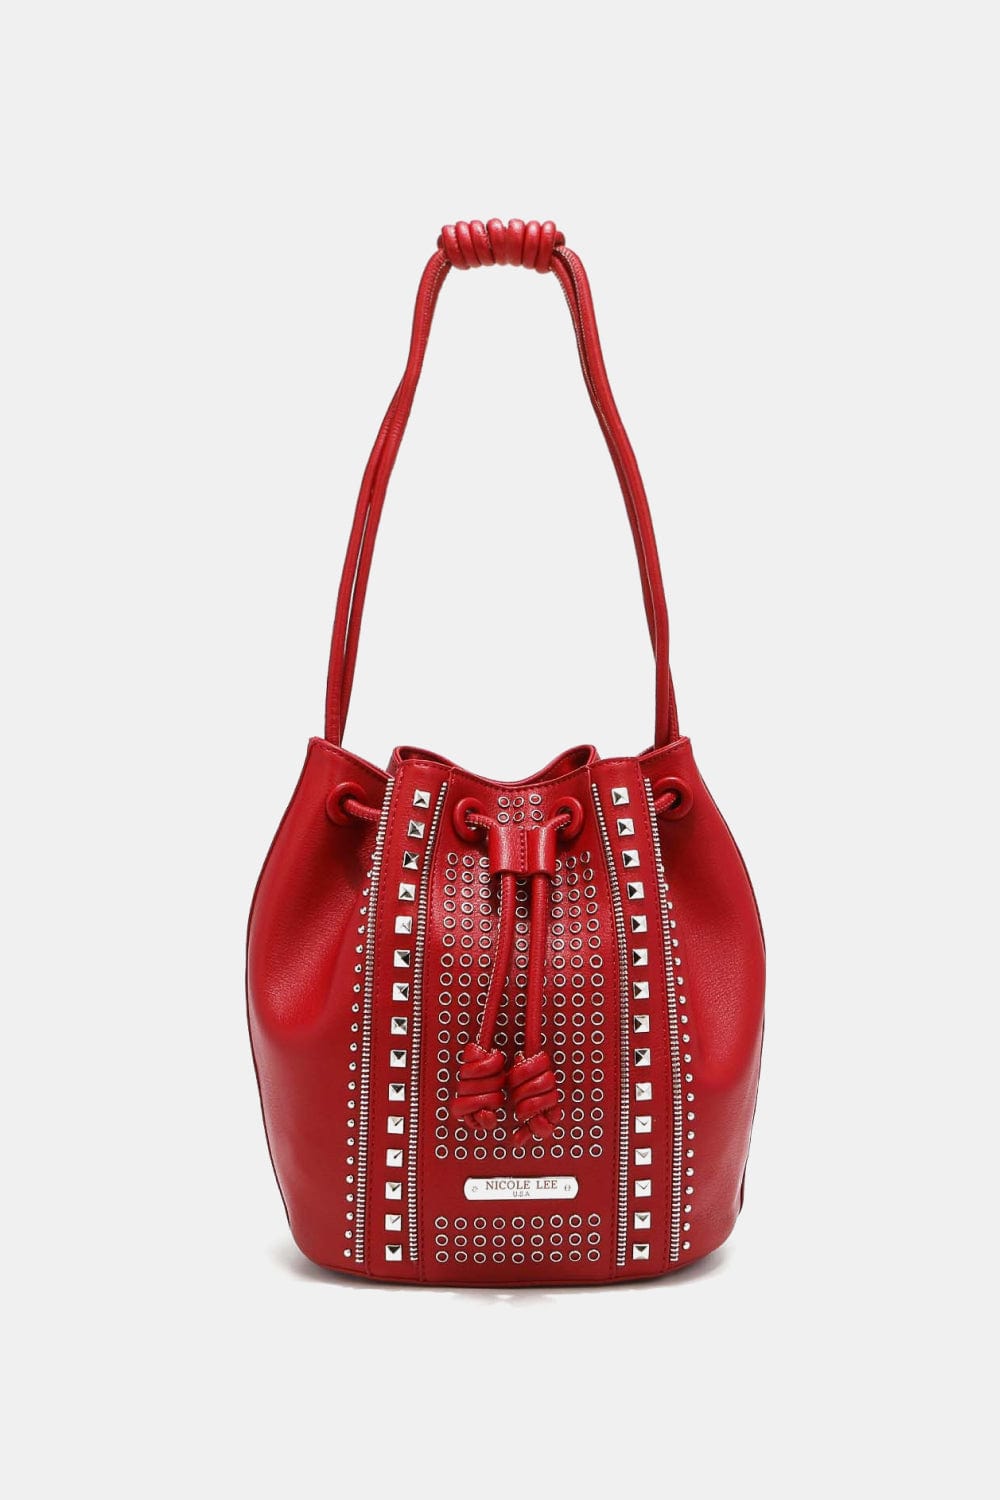 The802Gypsy Handbags, Wallets & Cases GYPSY-Nicole Lee USA-Studded Bucket Bag